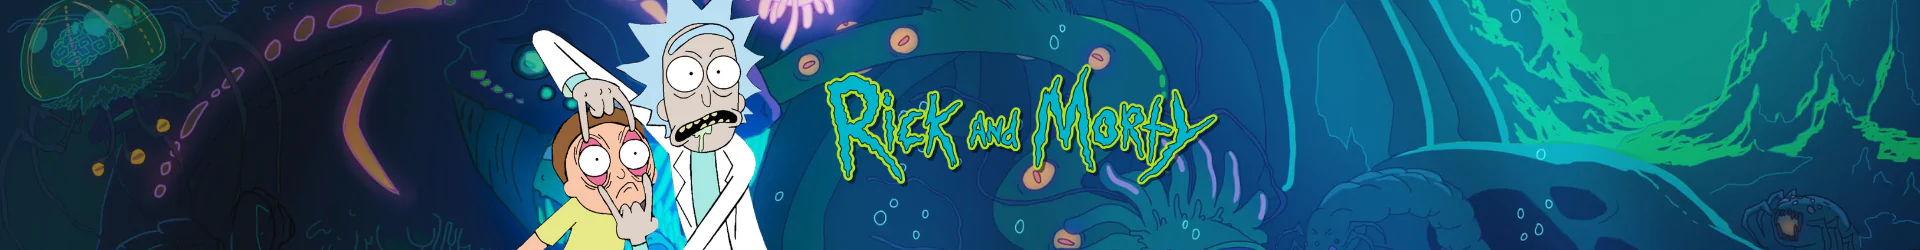 Rick and Morty doormats banner